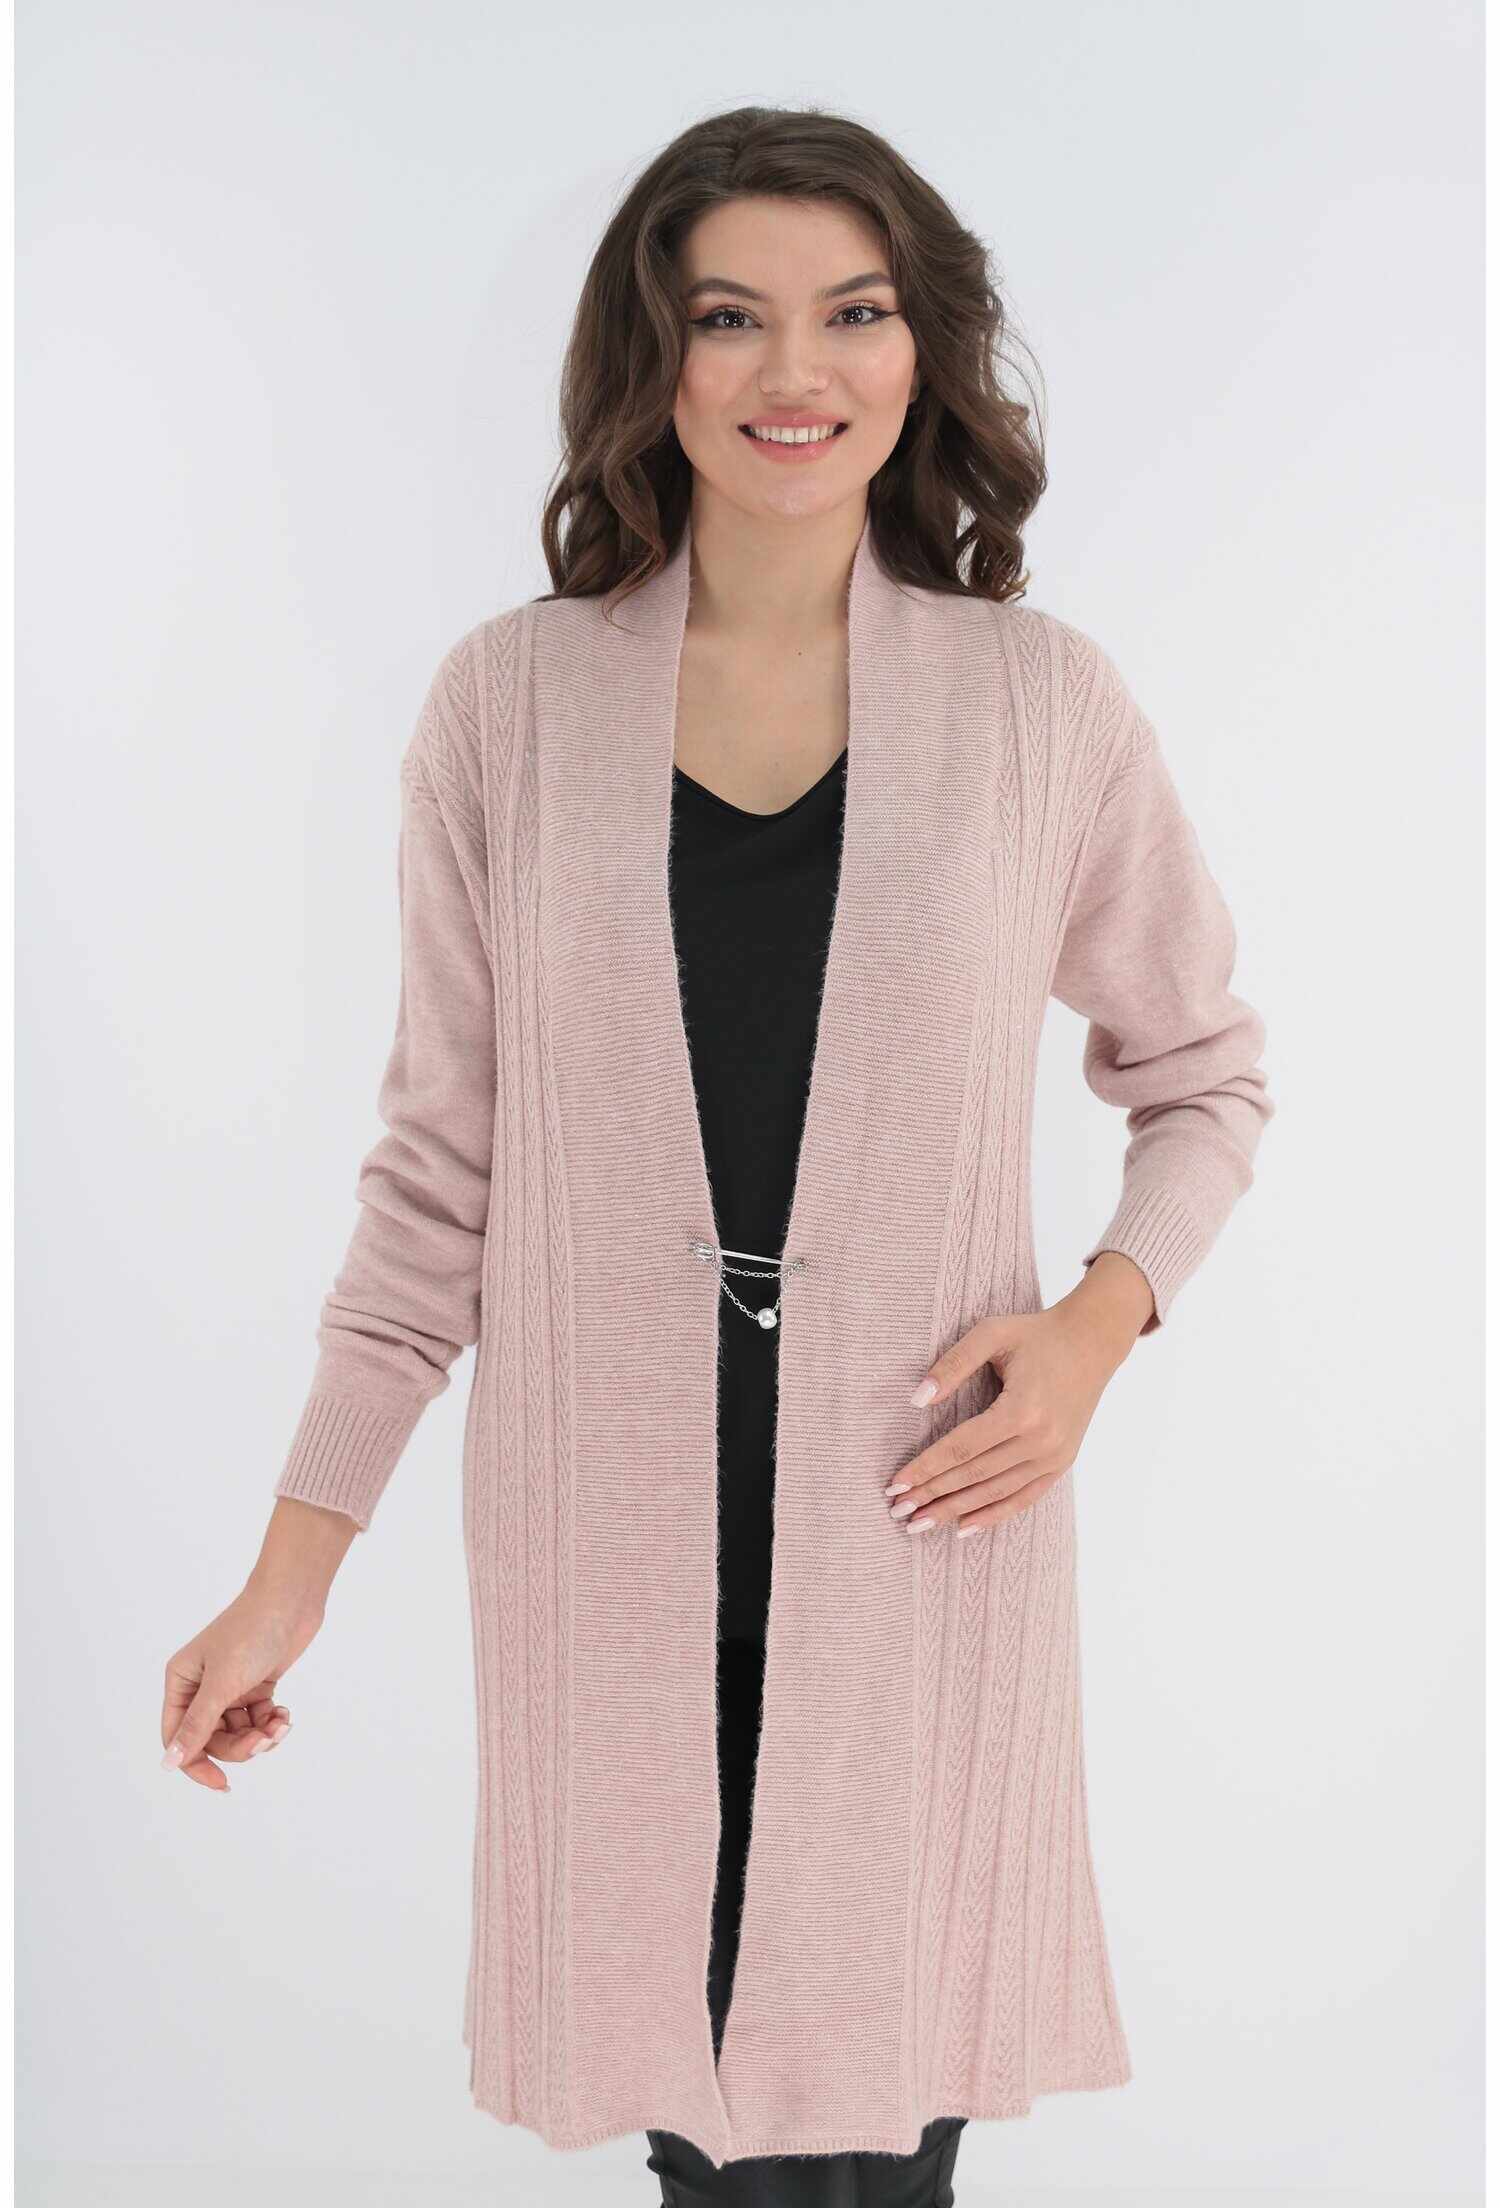 Cardigan roz-pudra tricotat model spic